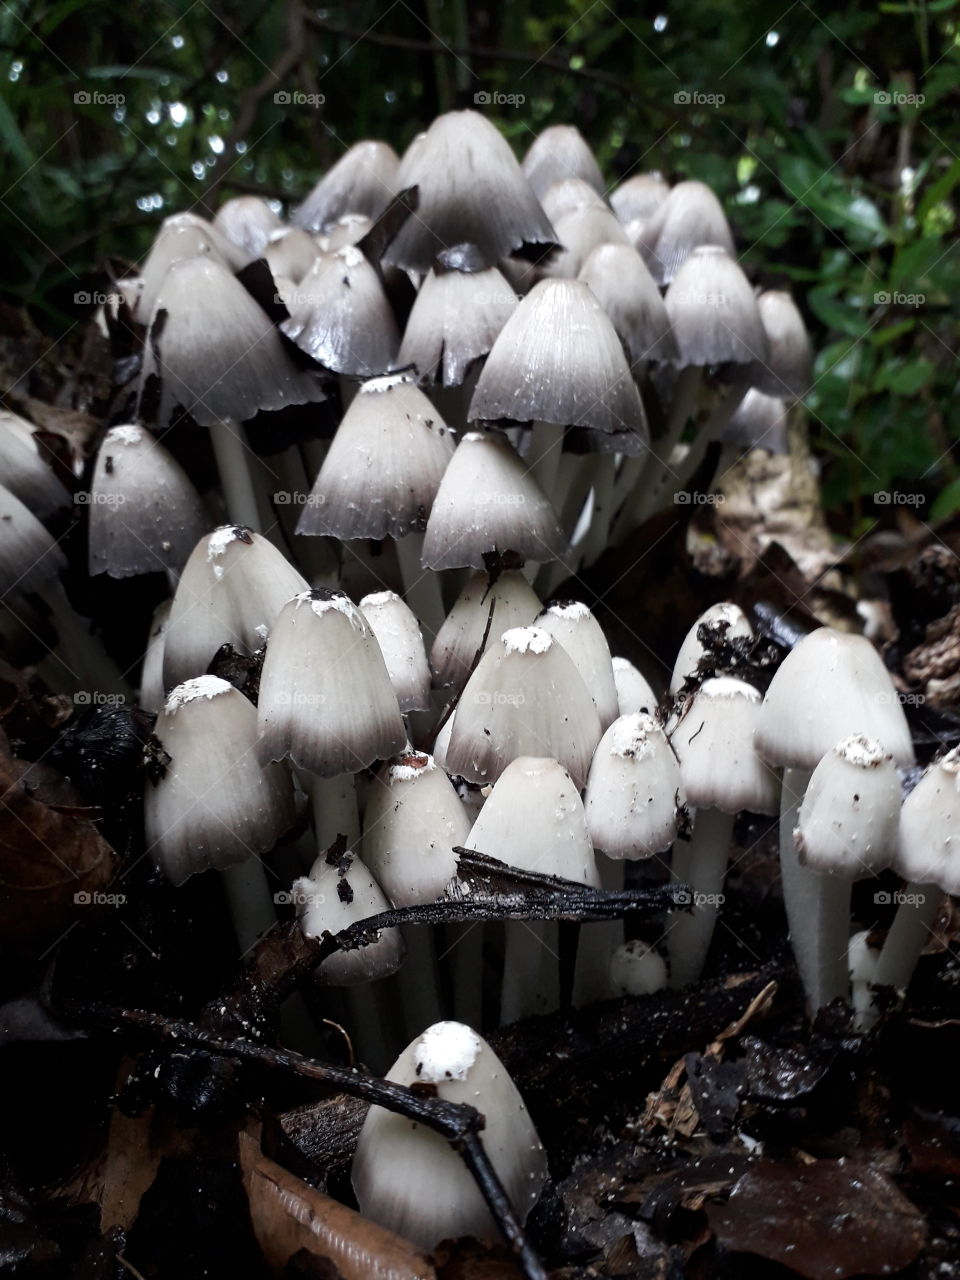 Maldivian Fungi, black and white Inkcaps